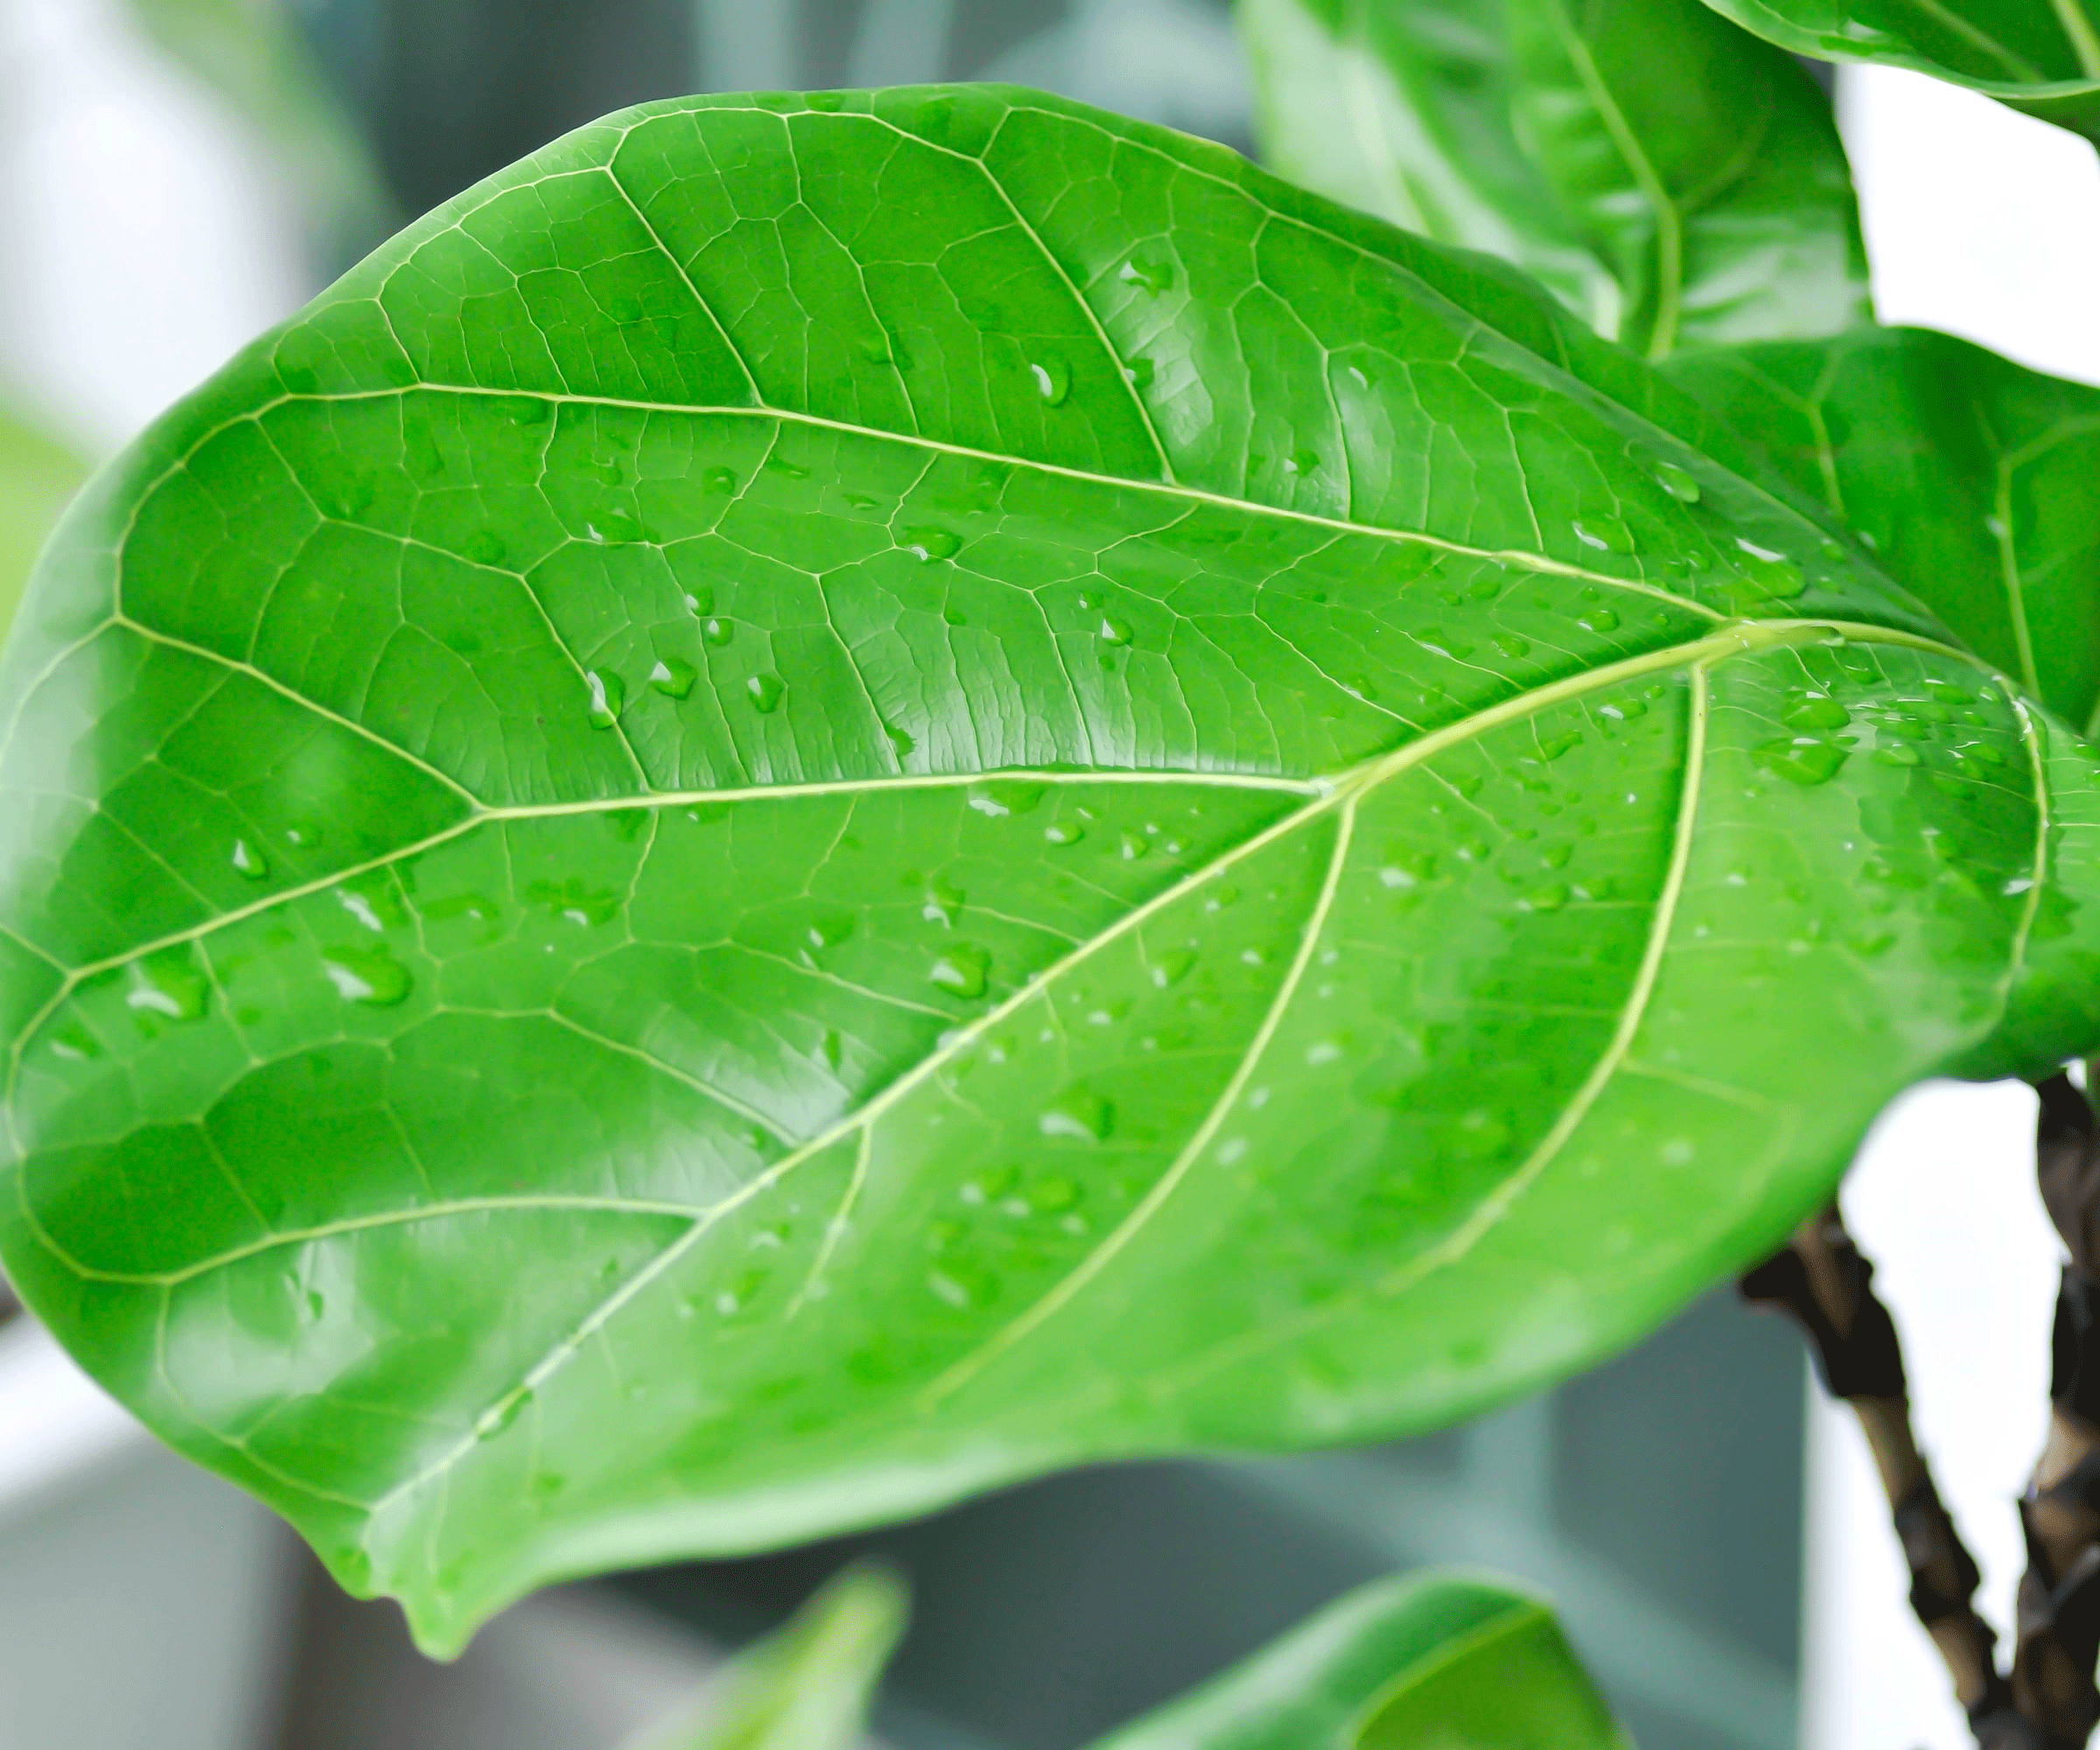 fiddle leaf fig leaf with water droplets